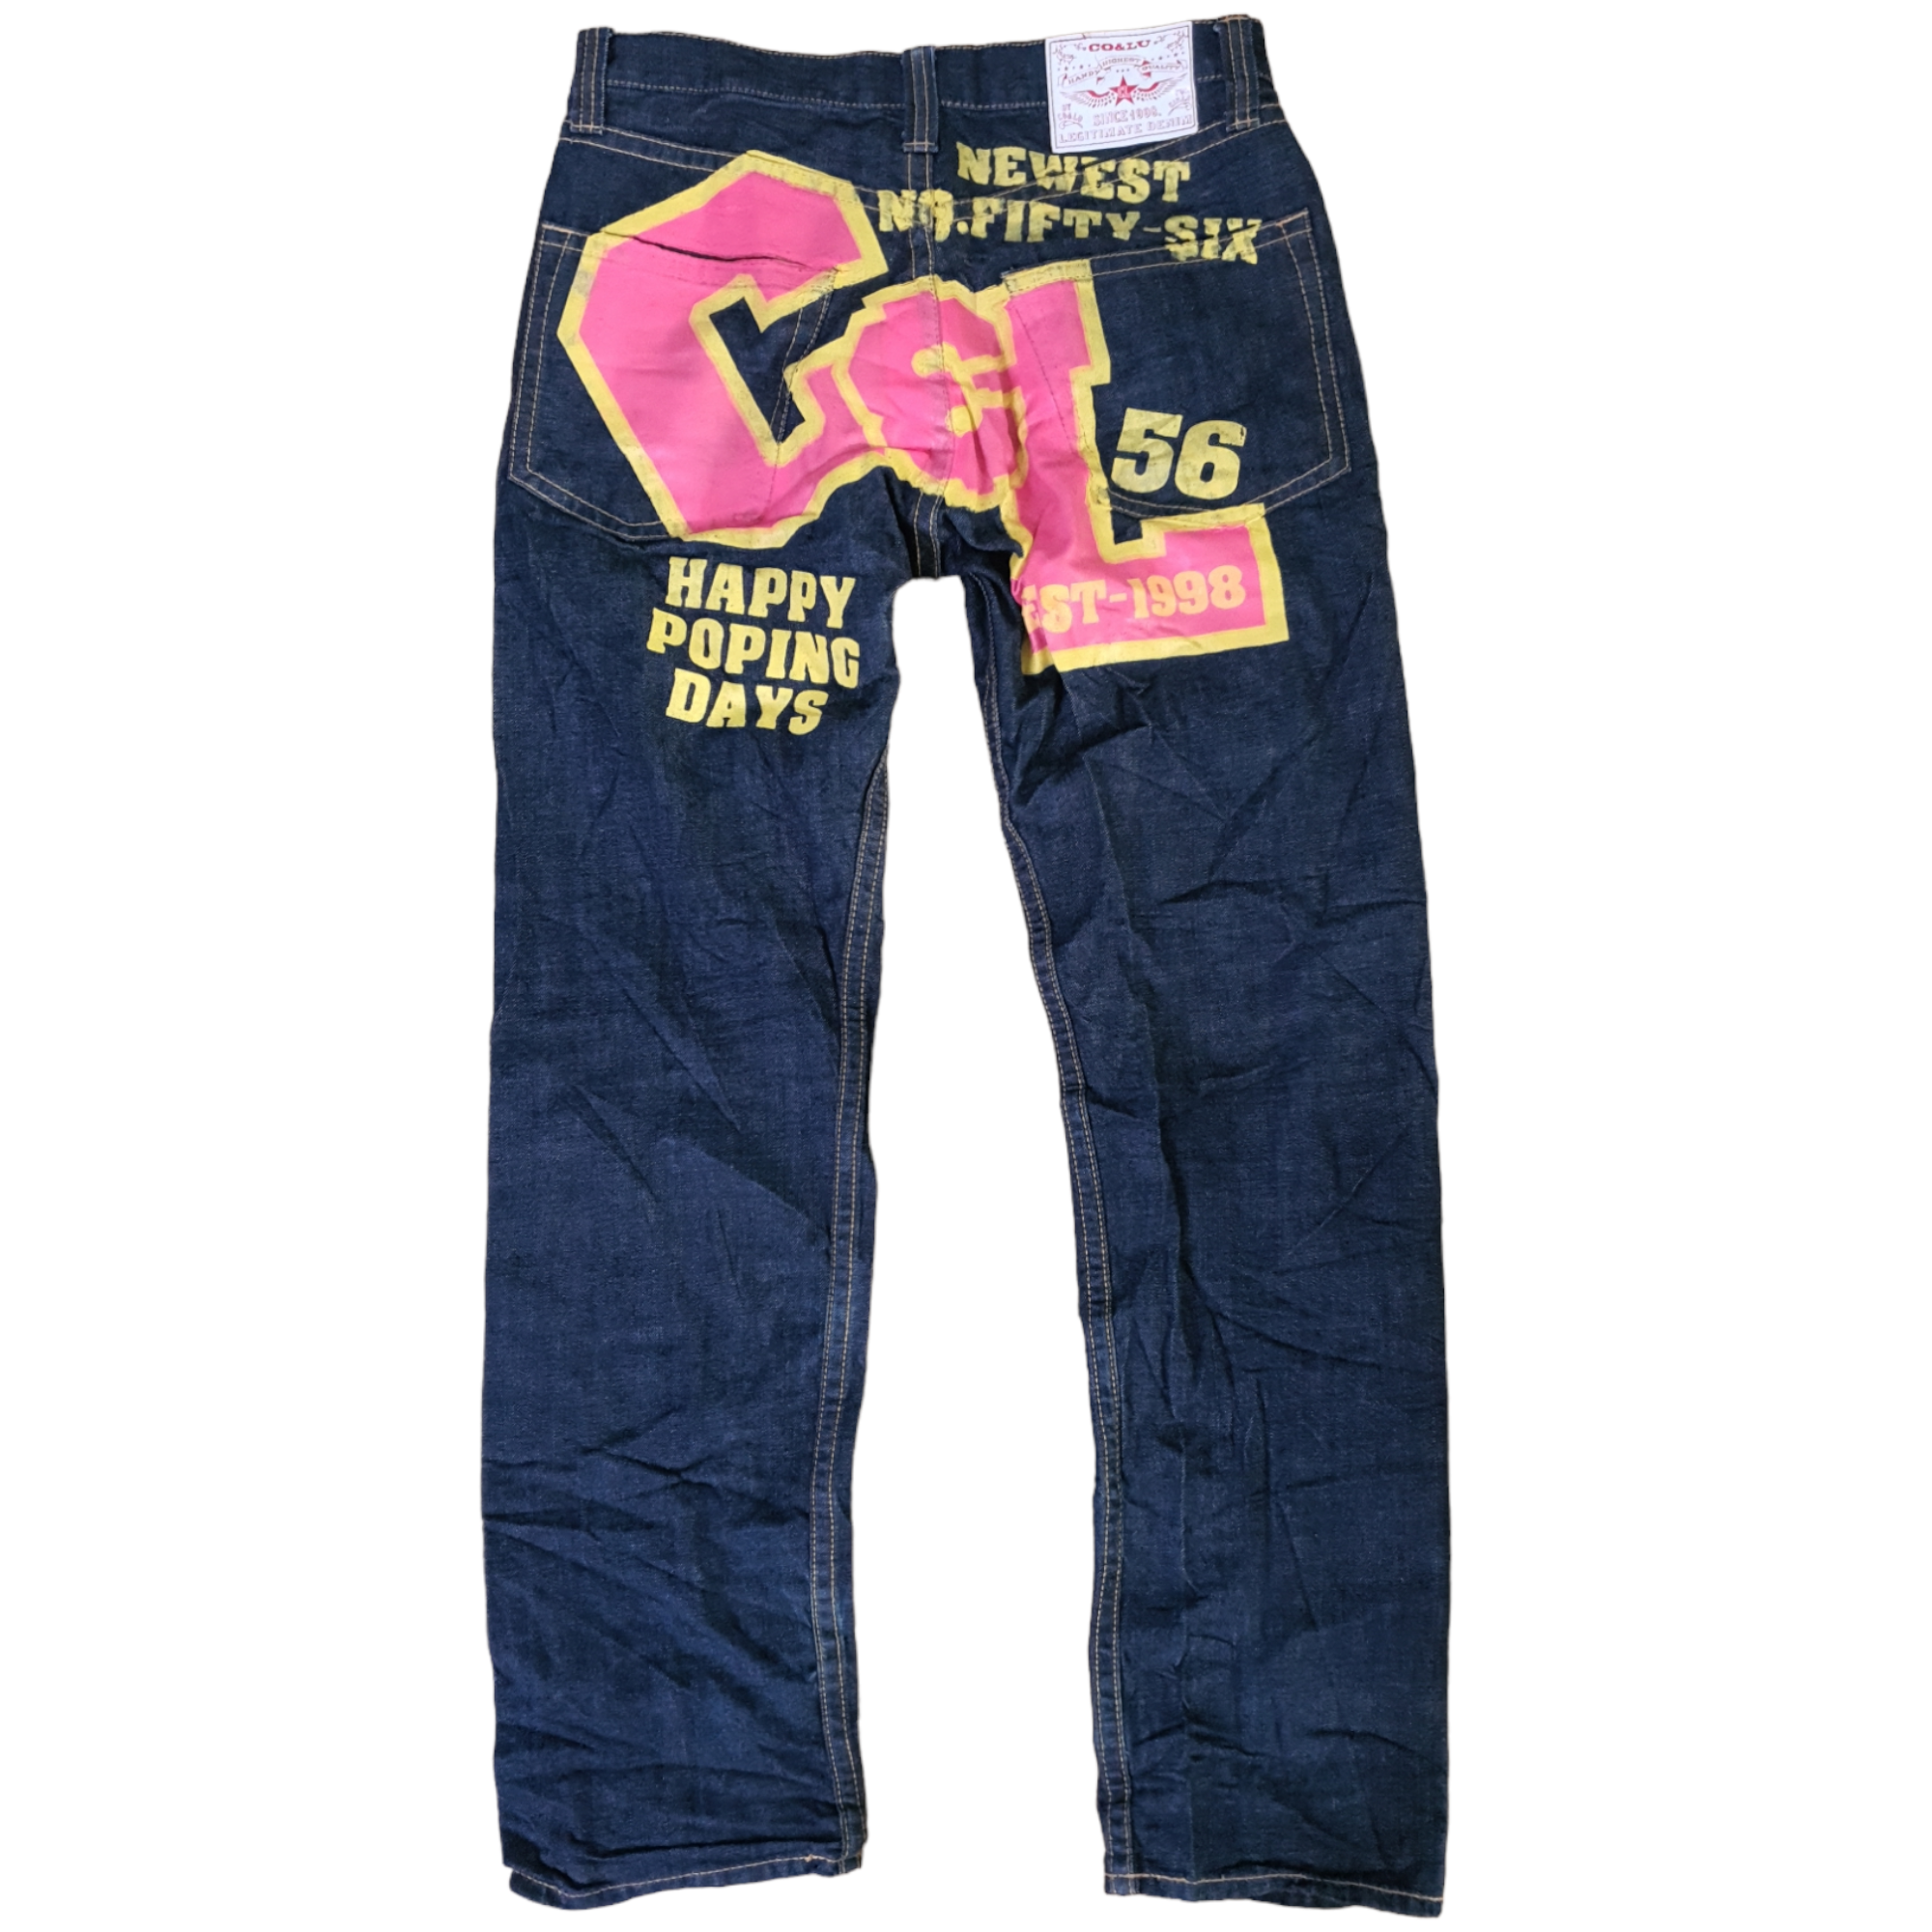 [34x32] CO&LU Jeans